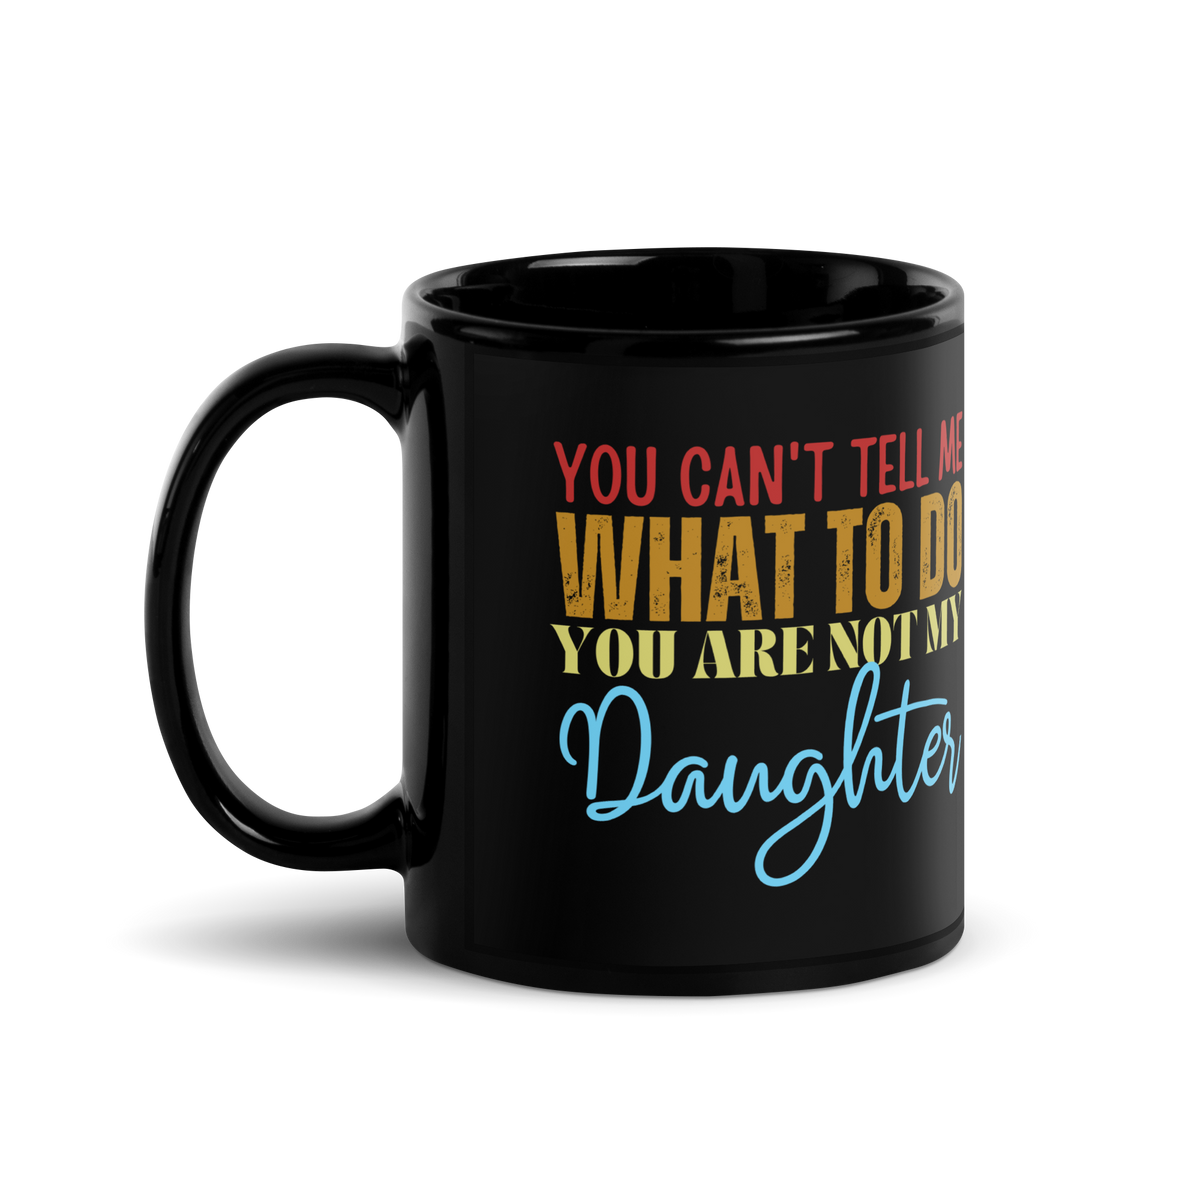 Coffee lovers, Dad Mug, Dad coffee mug, dad tea mug, mom mug, gift for her, gift for him, gift for mom, gift for dad, new papa gift, funny mom mug, funny dad mug, father mug, you can't tell me what to do you are not my daughter, mug, coffee mug, cup, tea mug